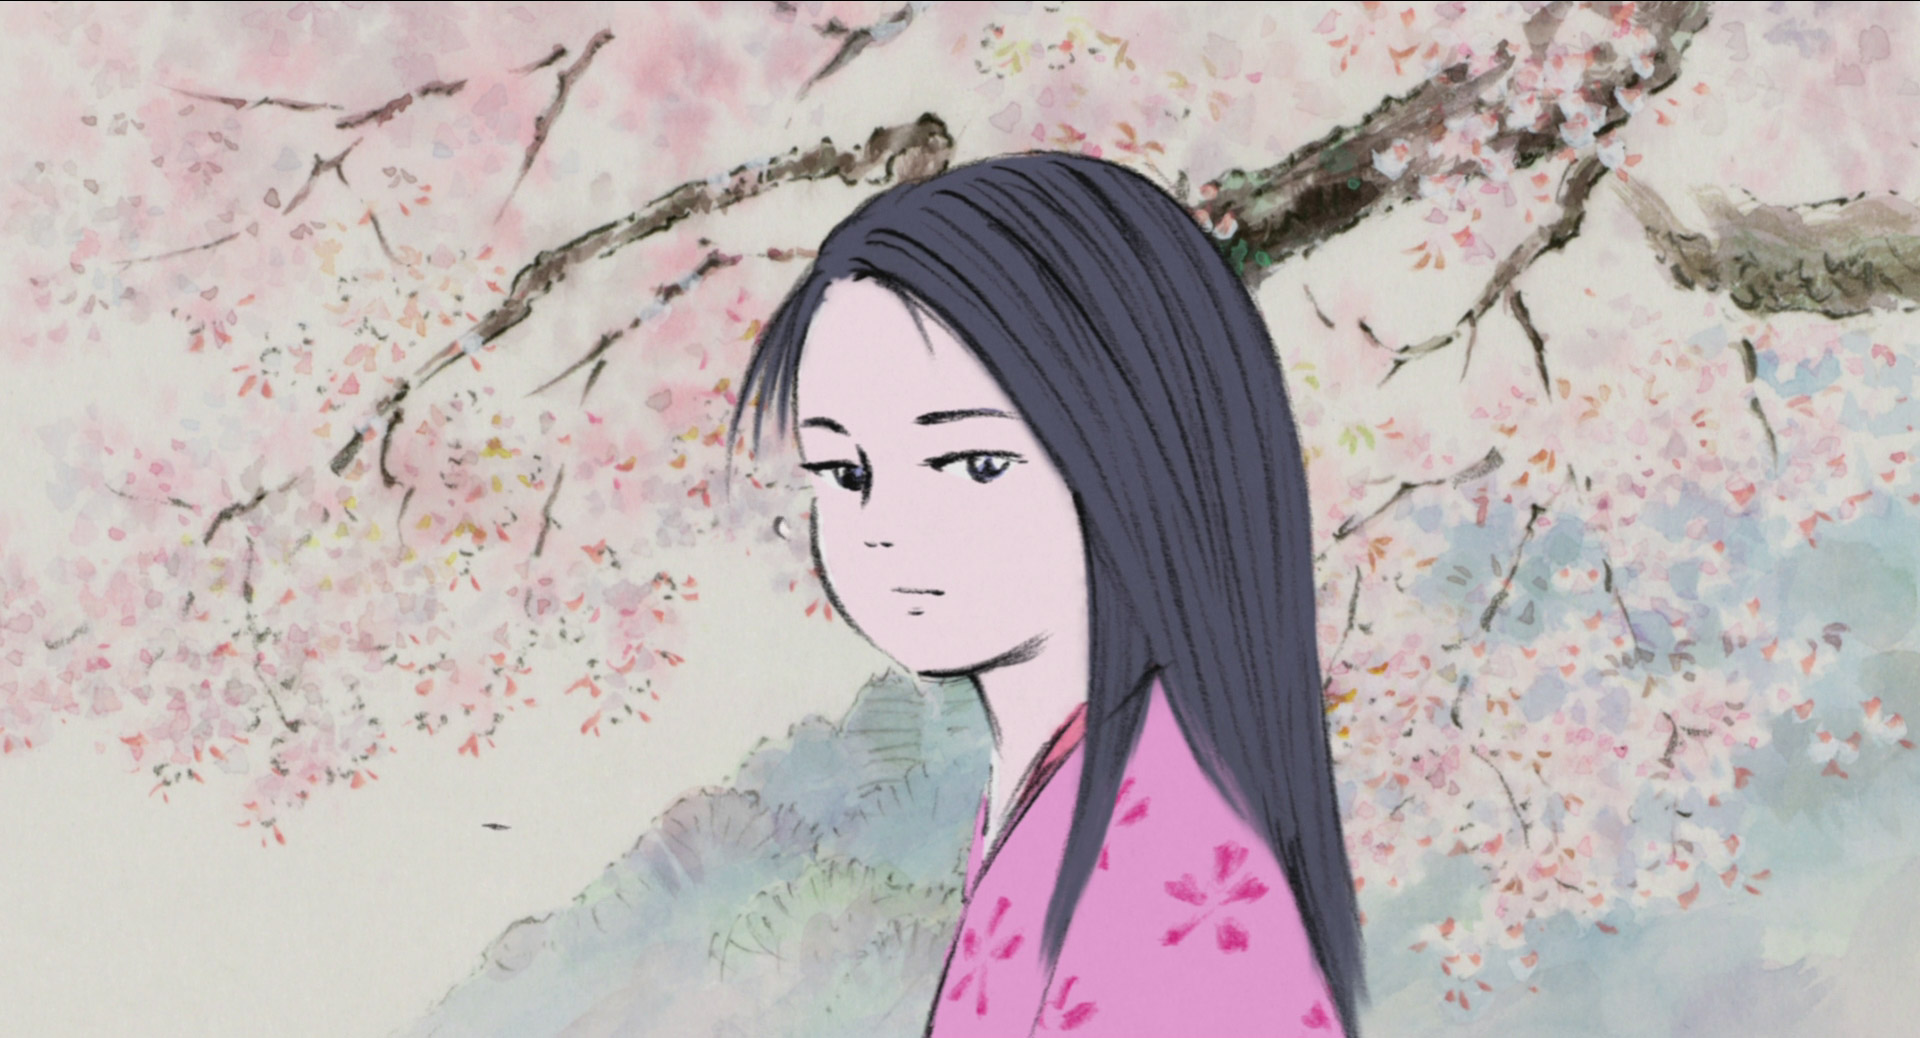 The Tale Of The Princess Kaguya #2